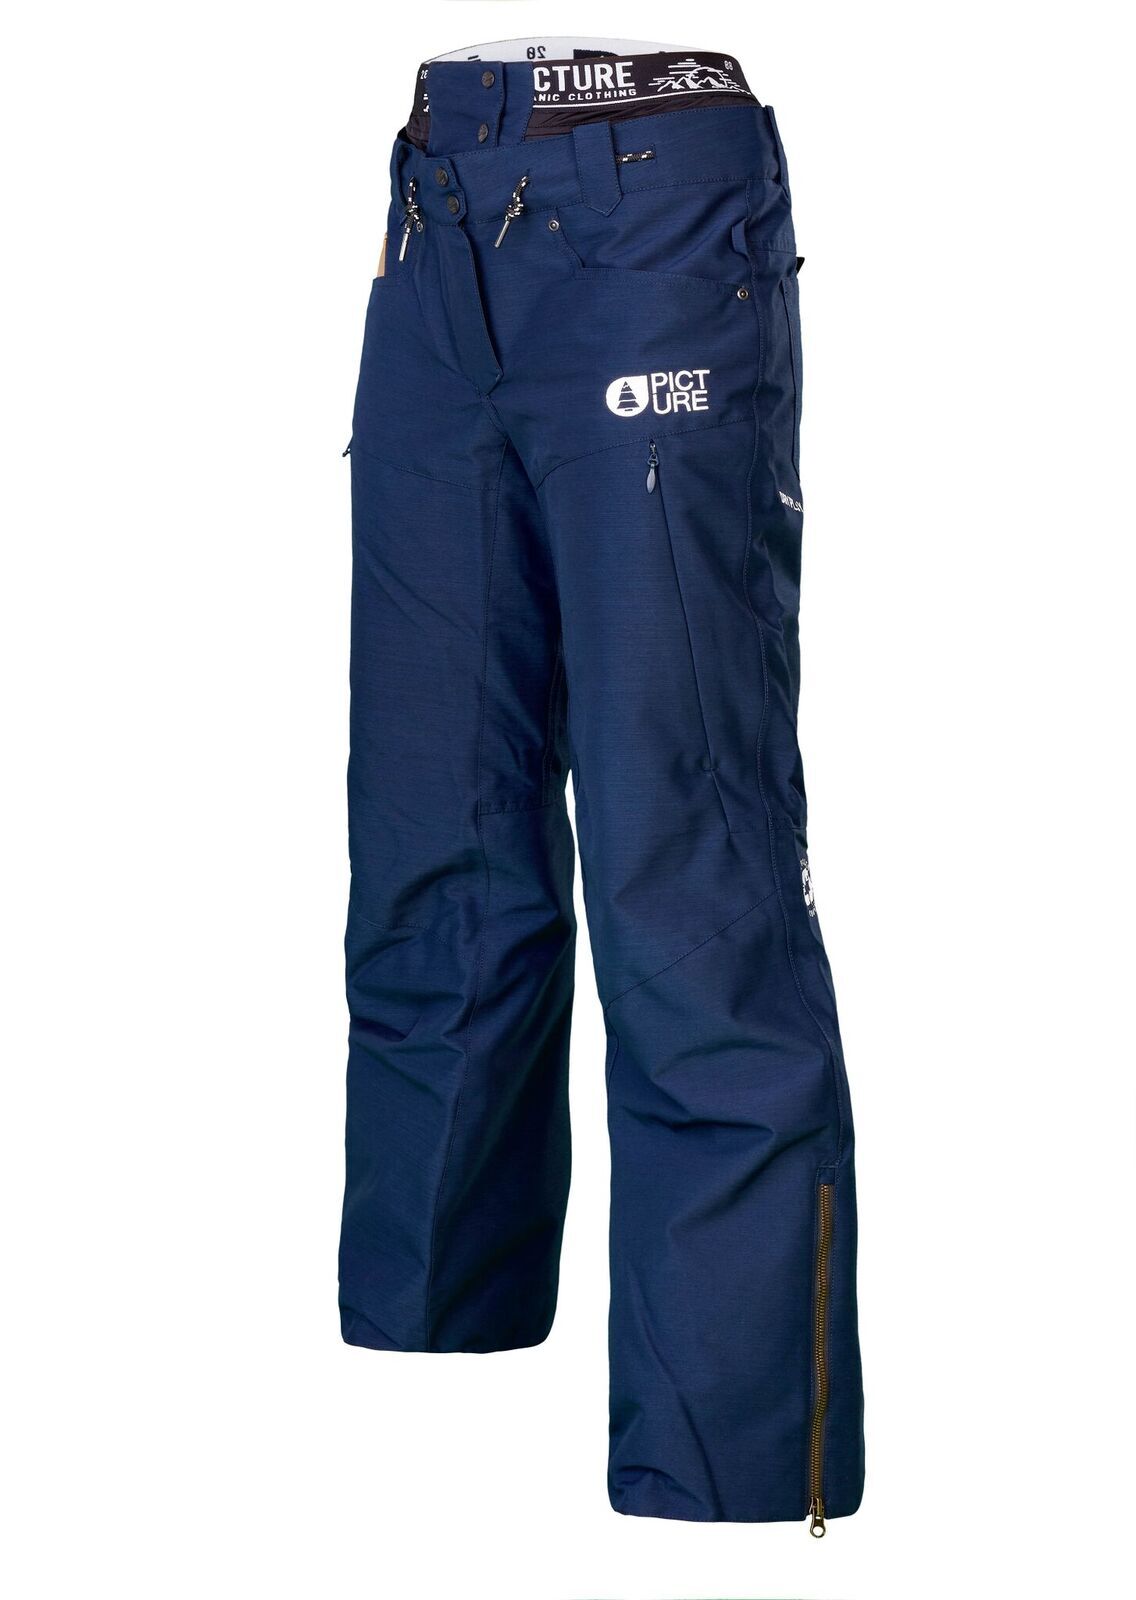 Picture Organic Clothing - Slany - Pantalón de esquí - Mujer